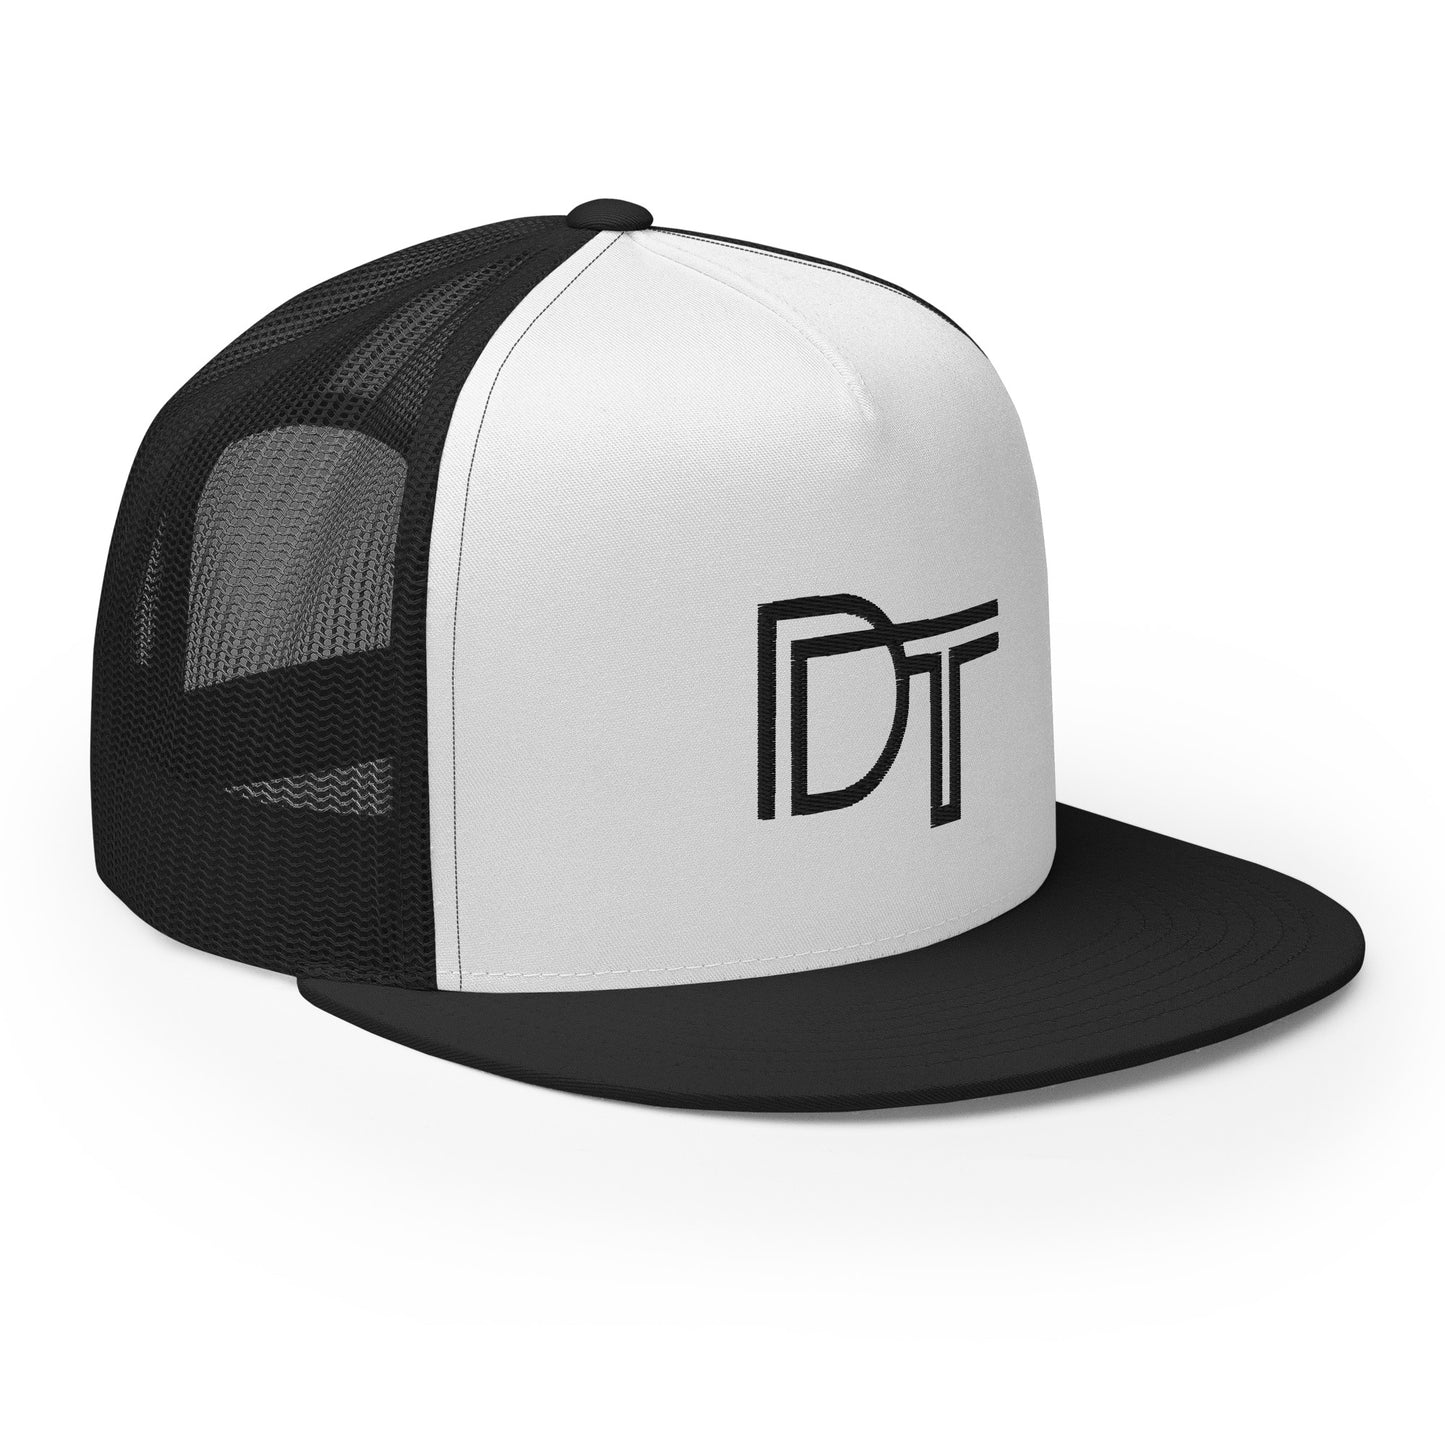 DT Sheffield "DS" Trucker Cap